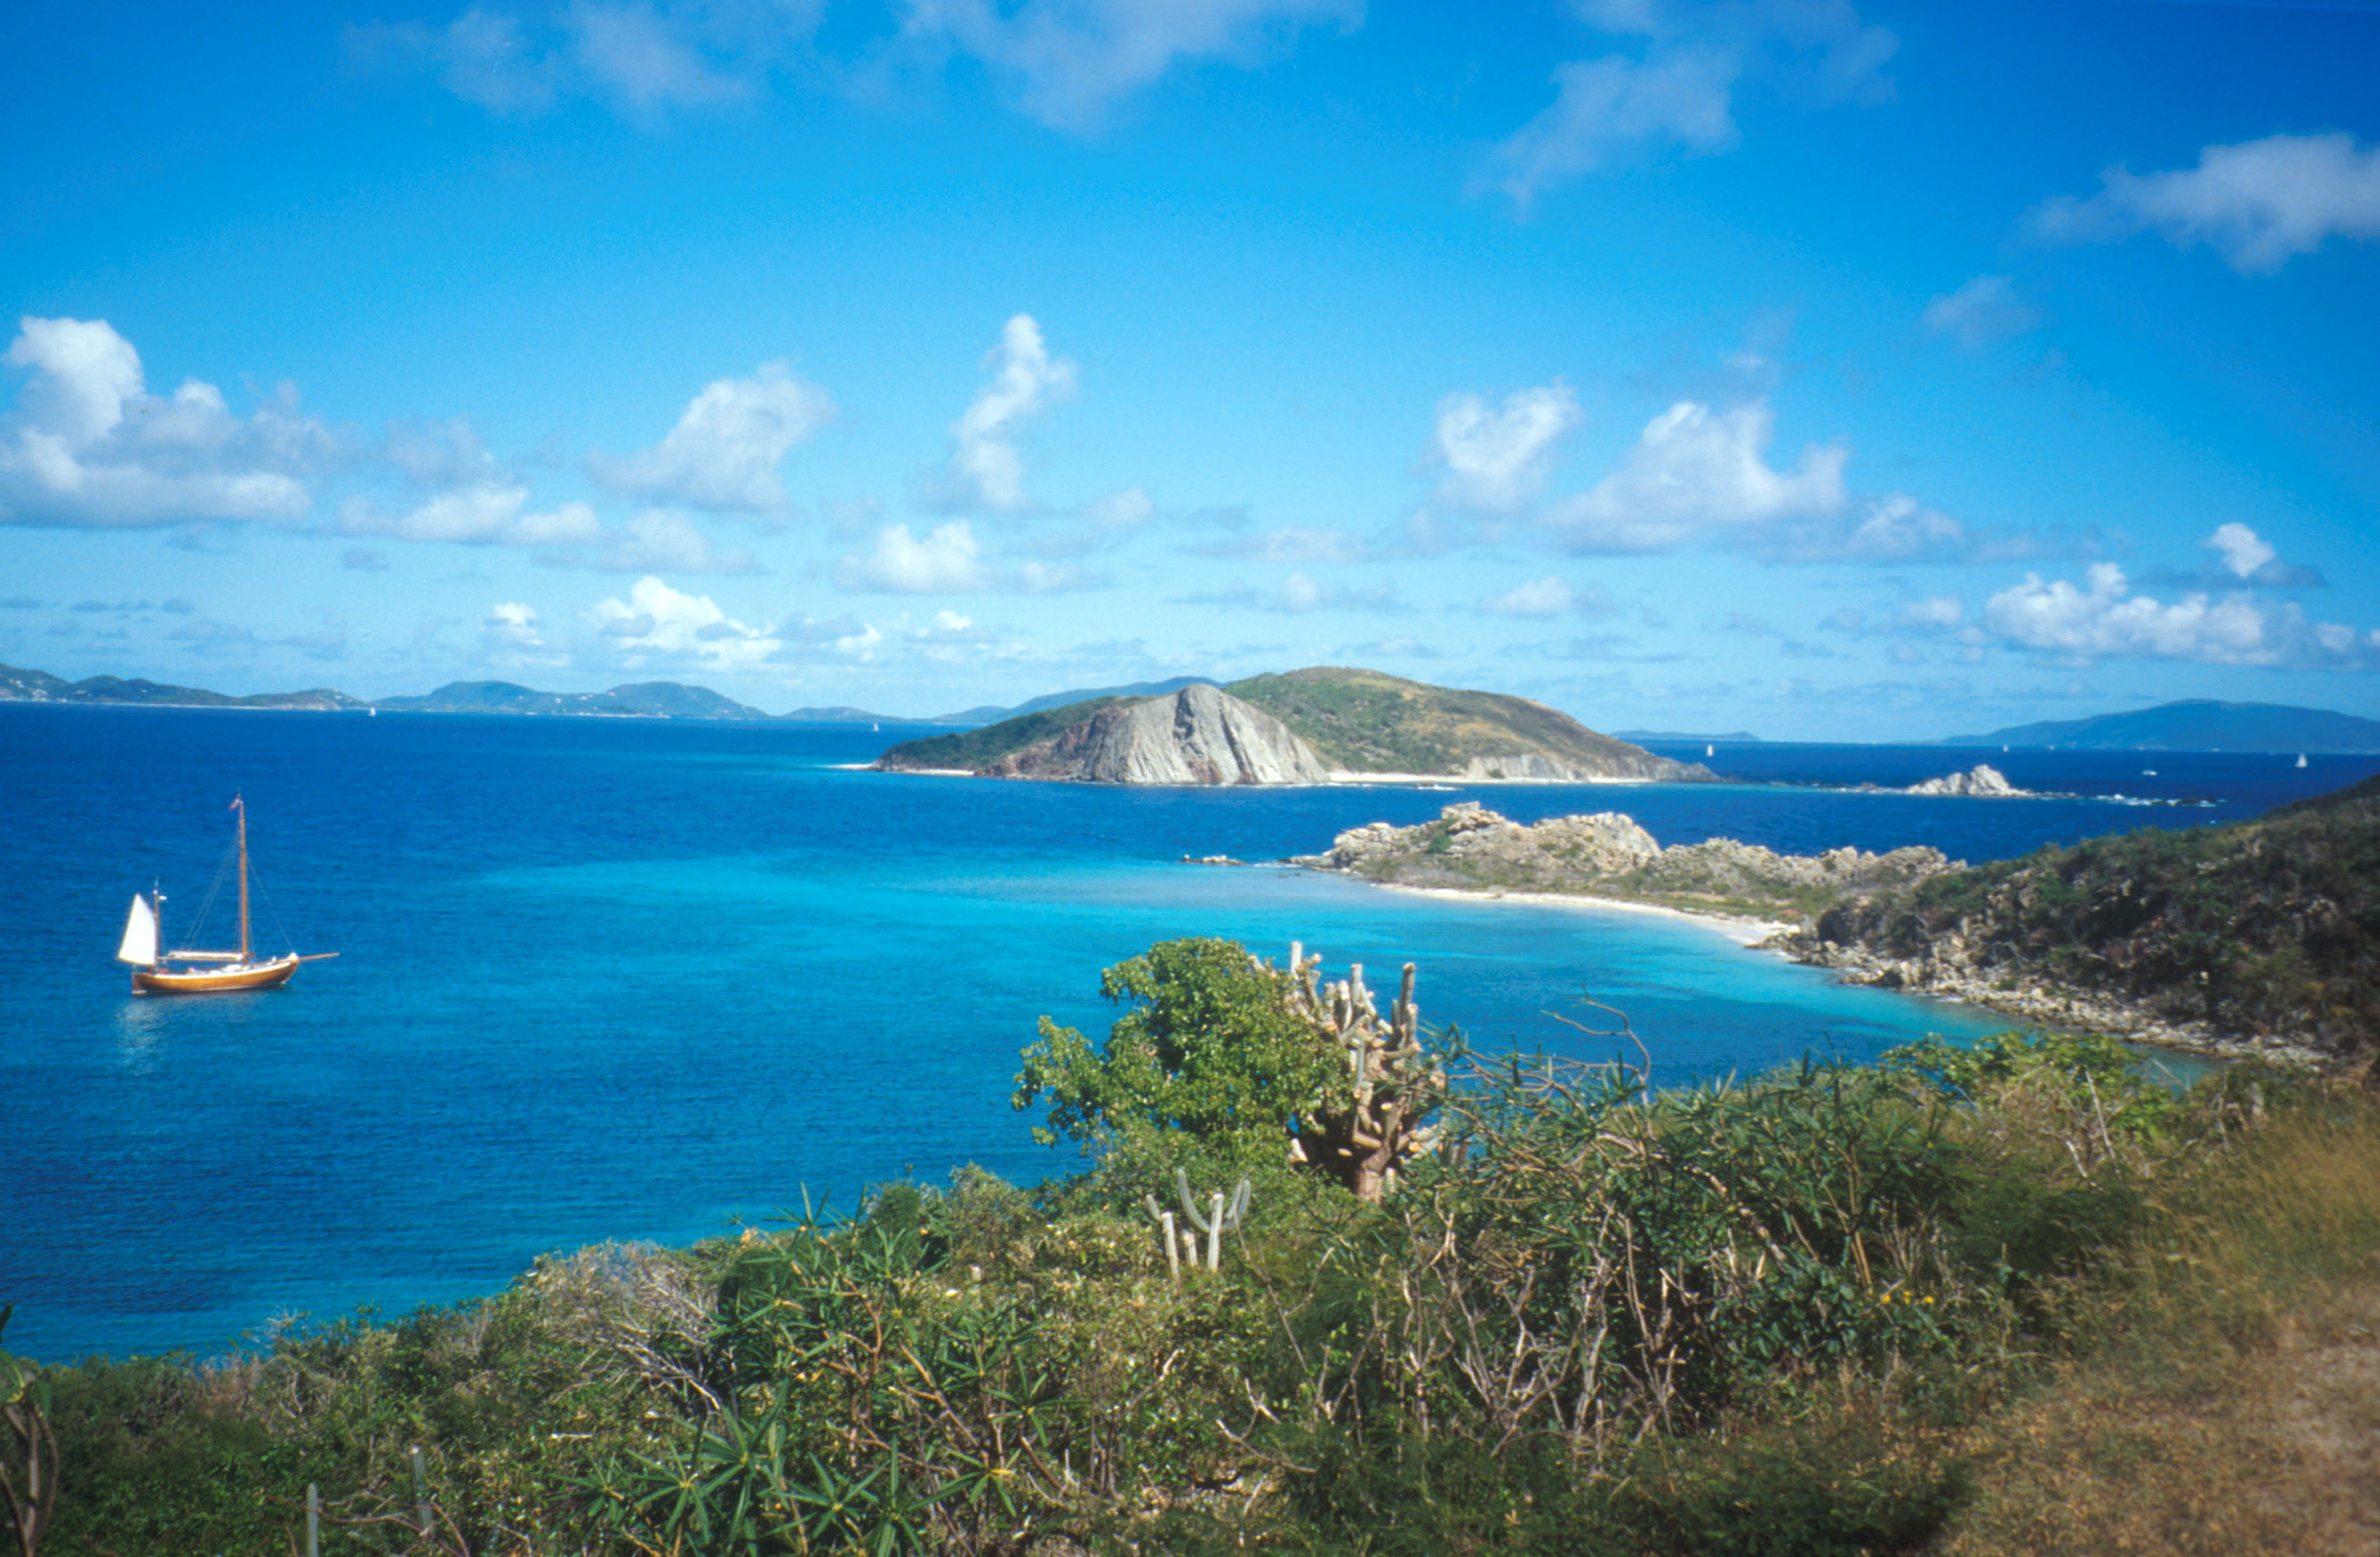 “Image courtesy of The British Virgin Islands Tourist Board”